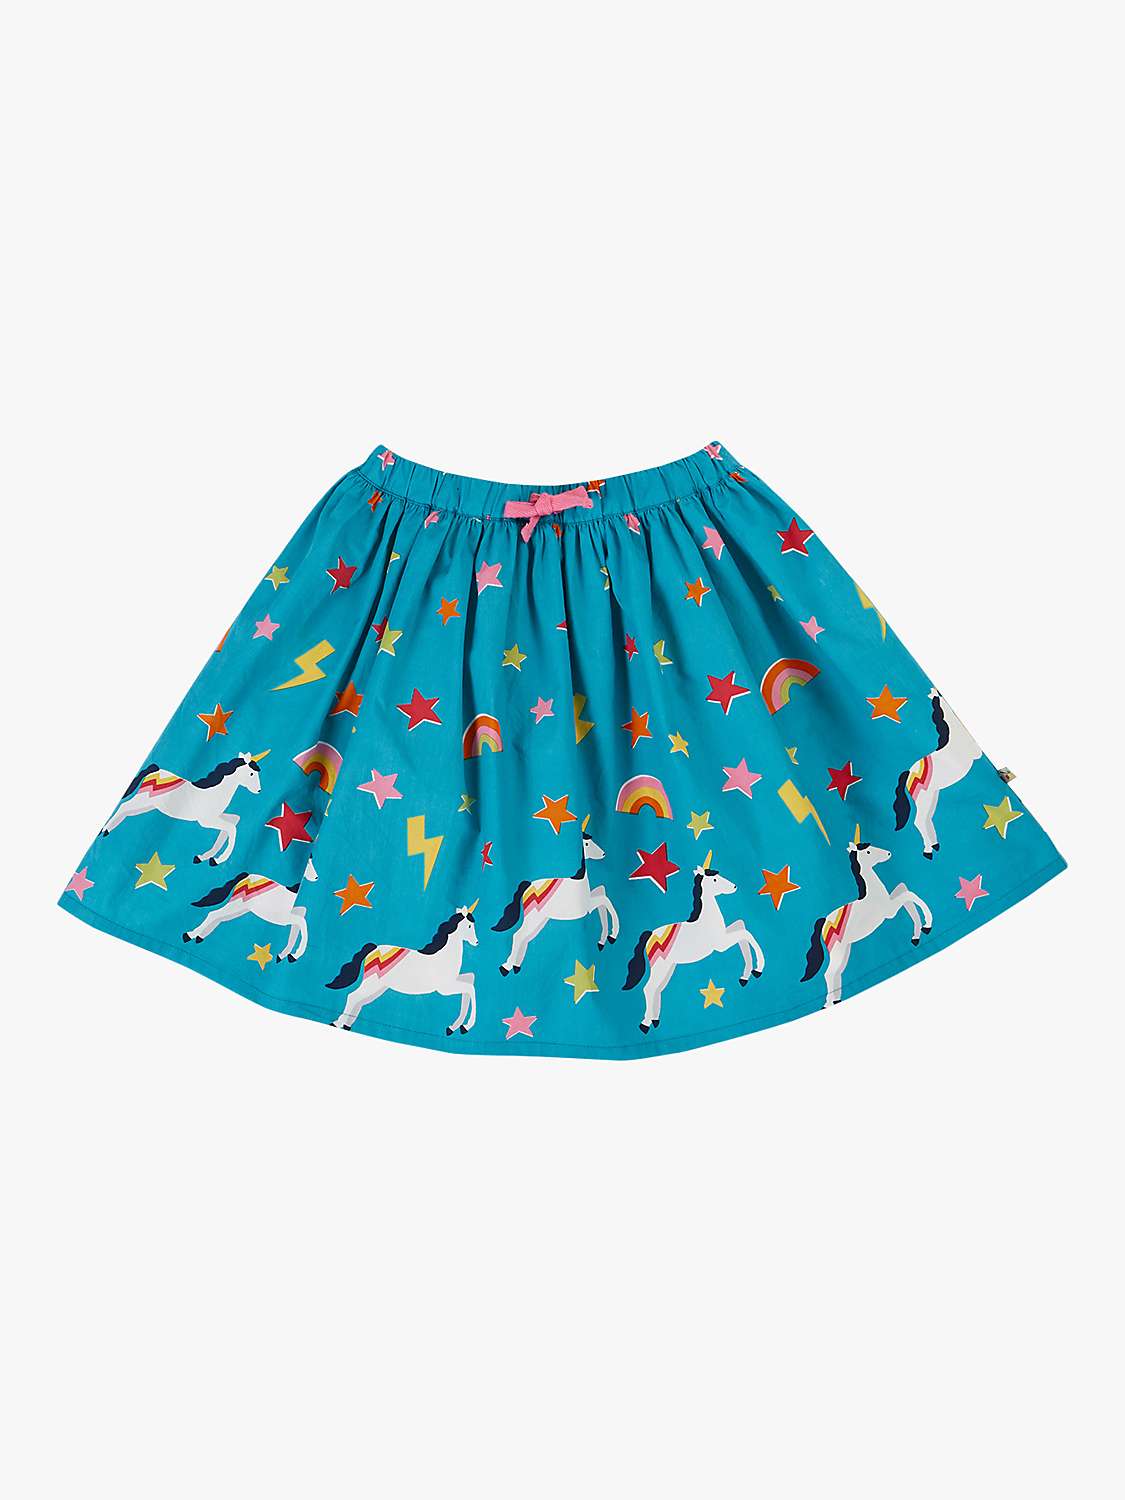 Buy Frugi Kids' Twirly Dream Skirt, Camper Blue Online at johnlewis.com